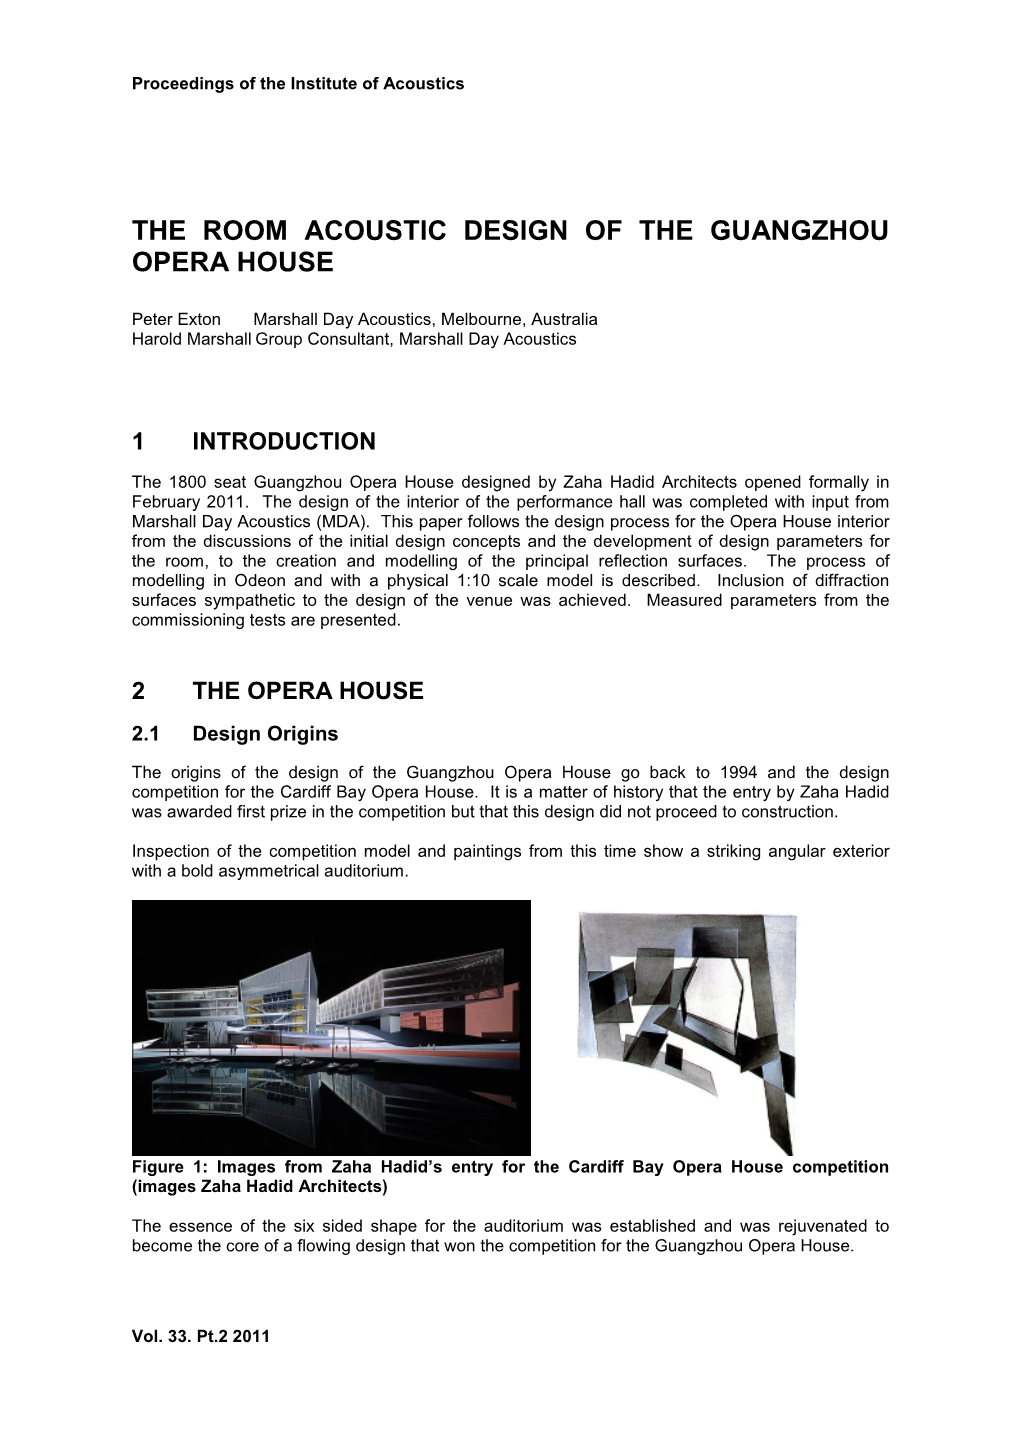 Guangzhou Opera House Acoustic Design